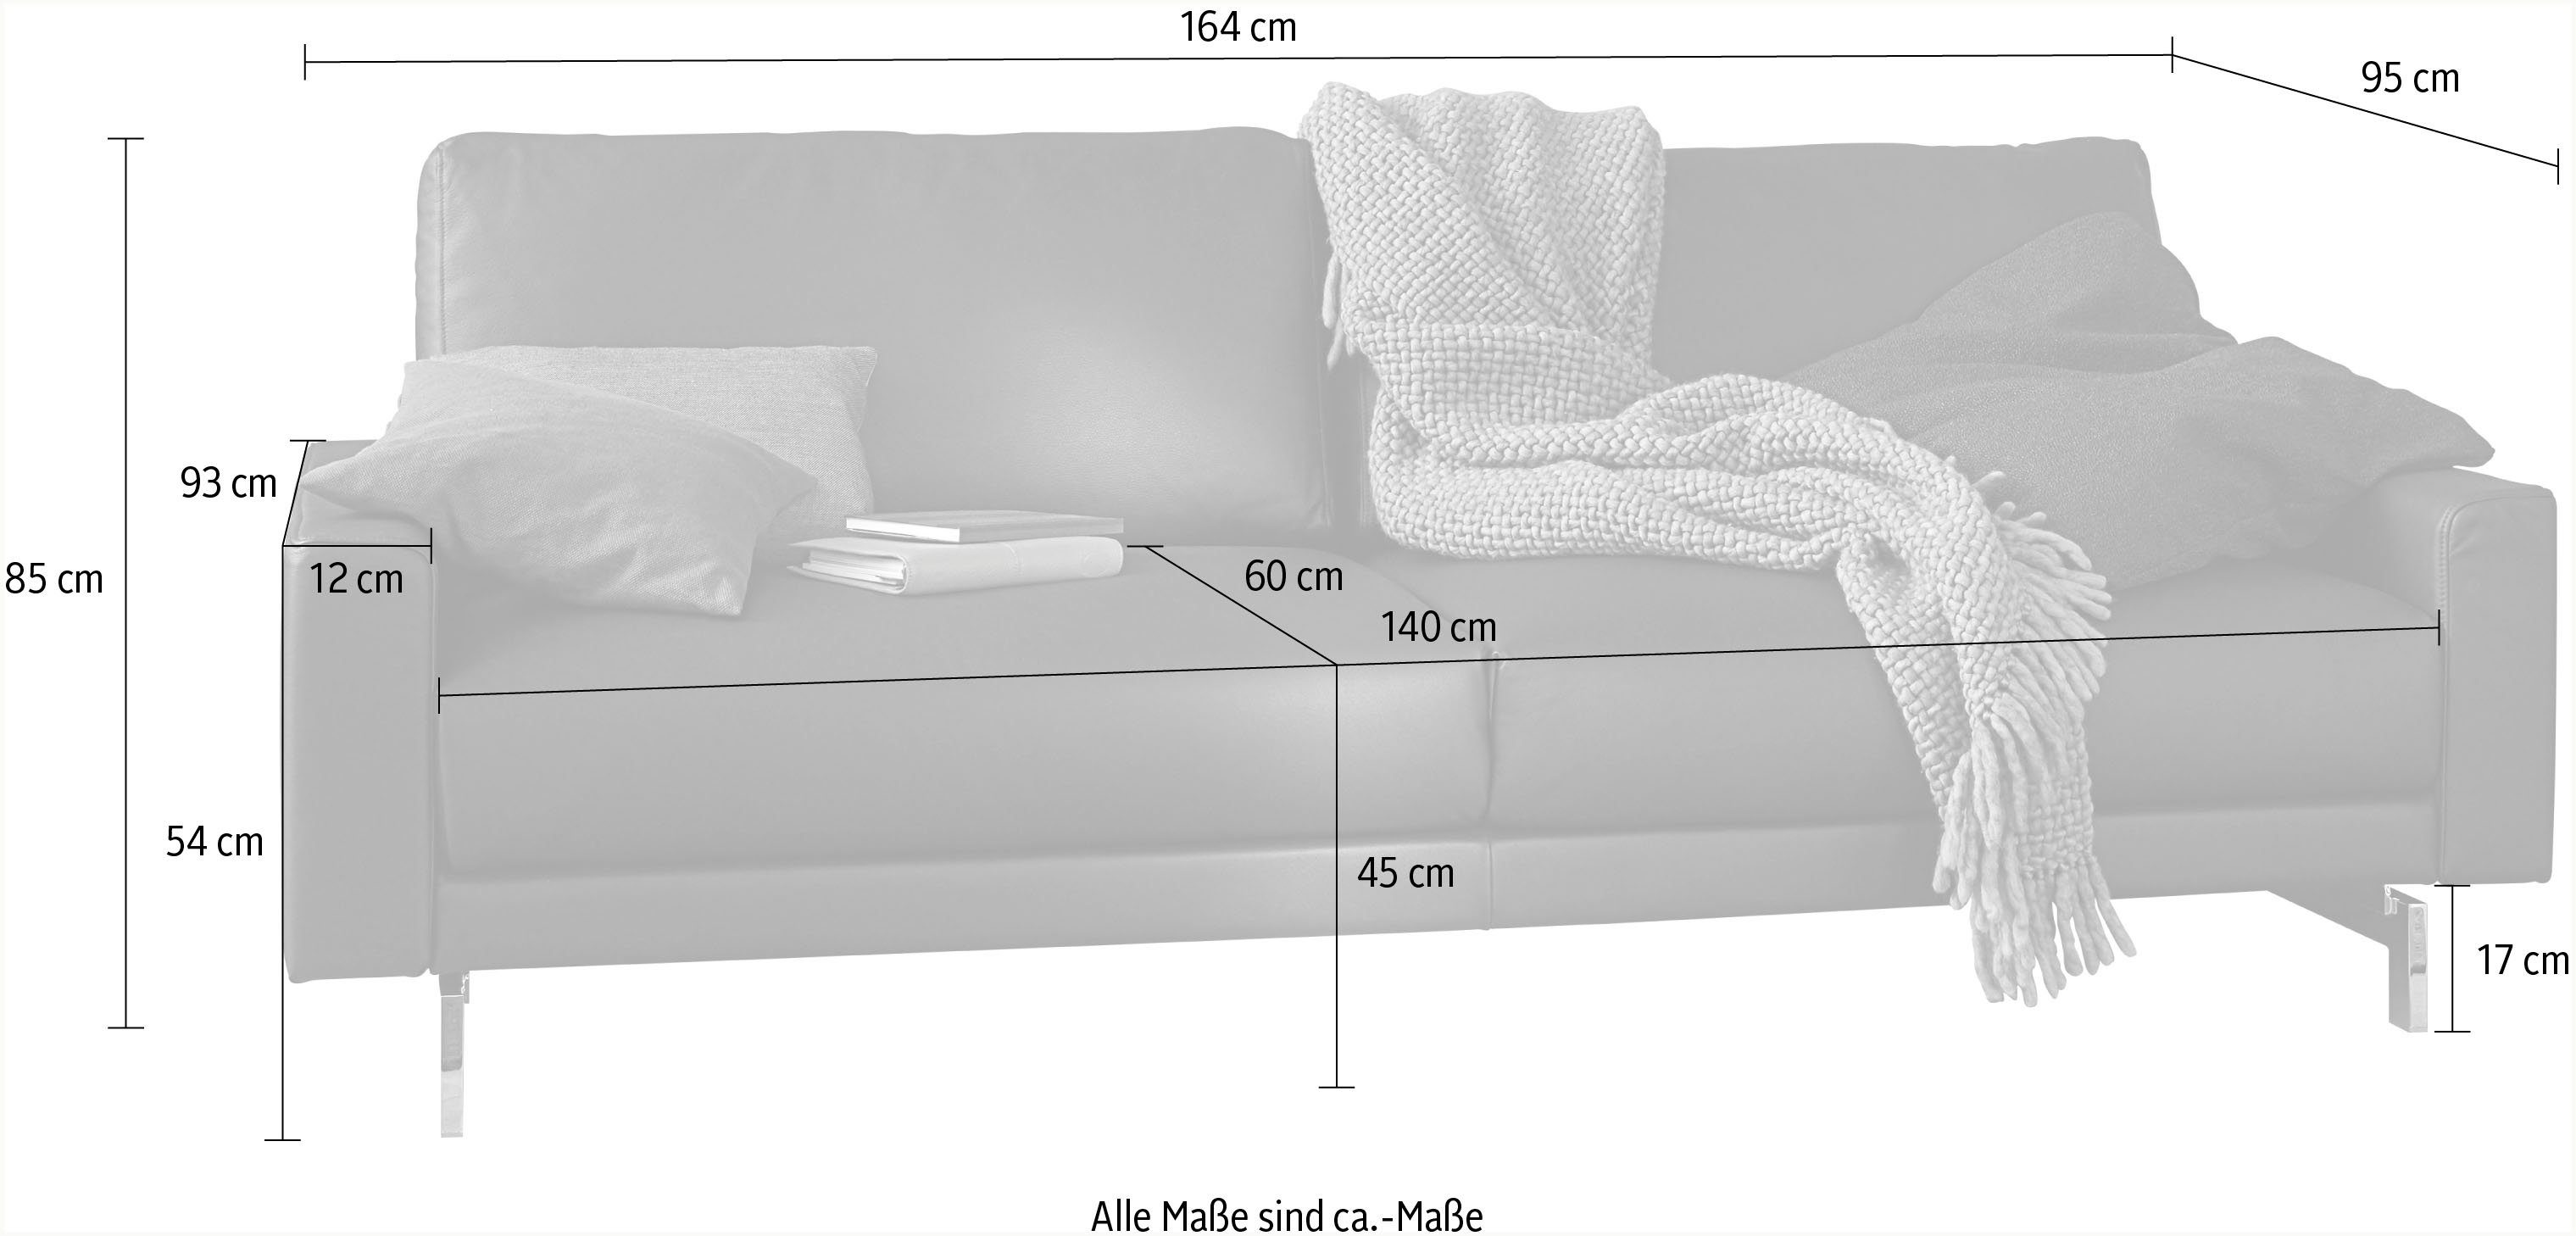 2-Sitzer cm niedrig, chromfarben Breite Armlehne glänzend, hülsta 164 Fuß hs.450, sofa